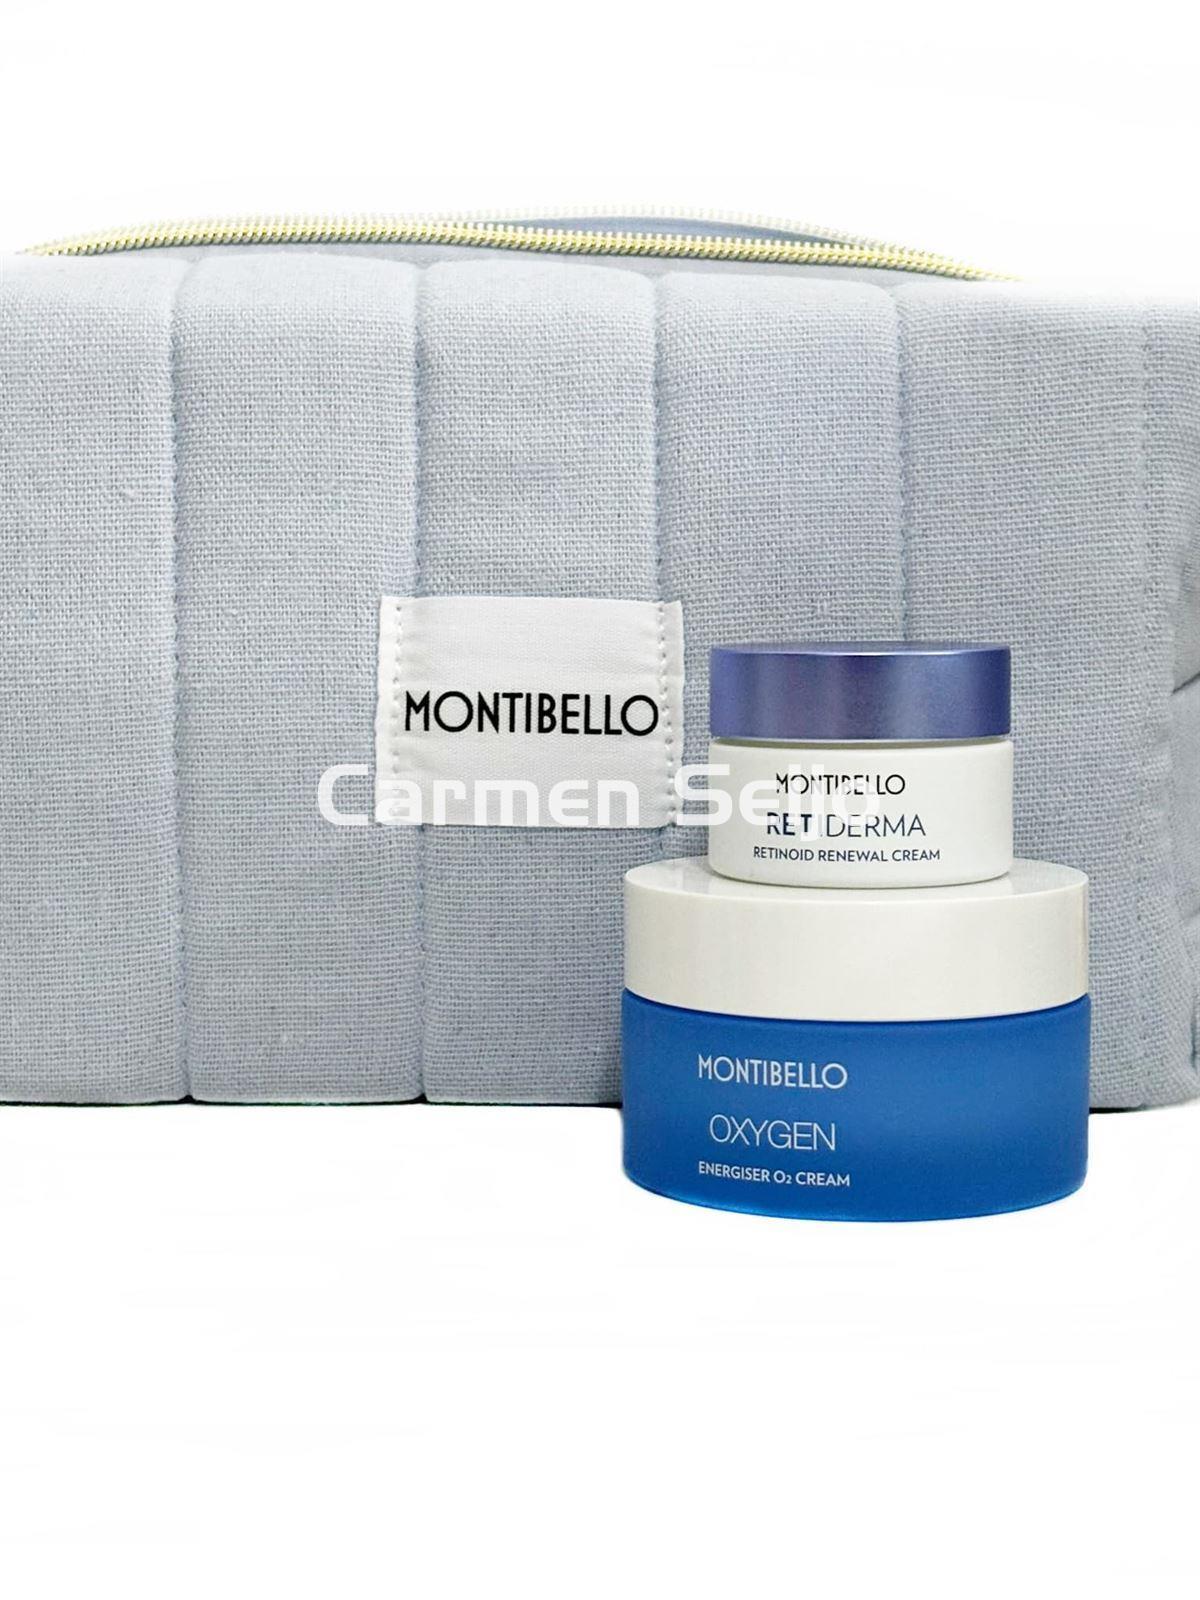 Montibello Pack Crema Energiser O2 Oxygen y Crema Retiderma Better Together - Imagen 1